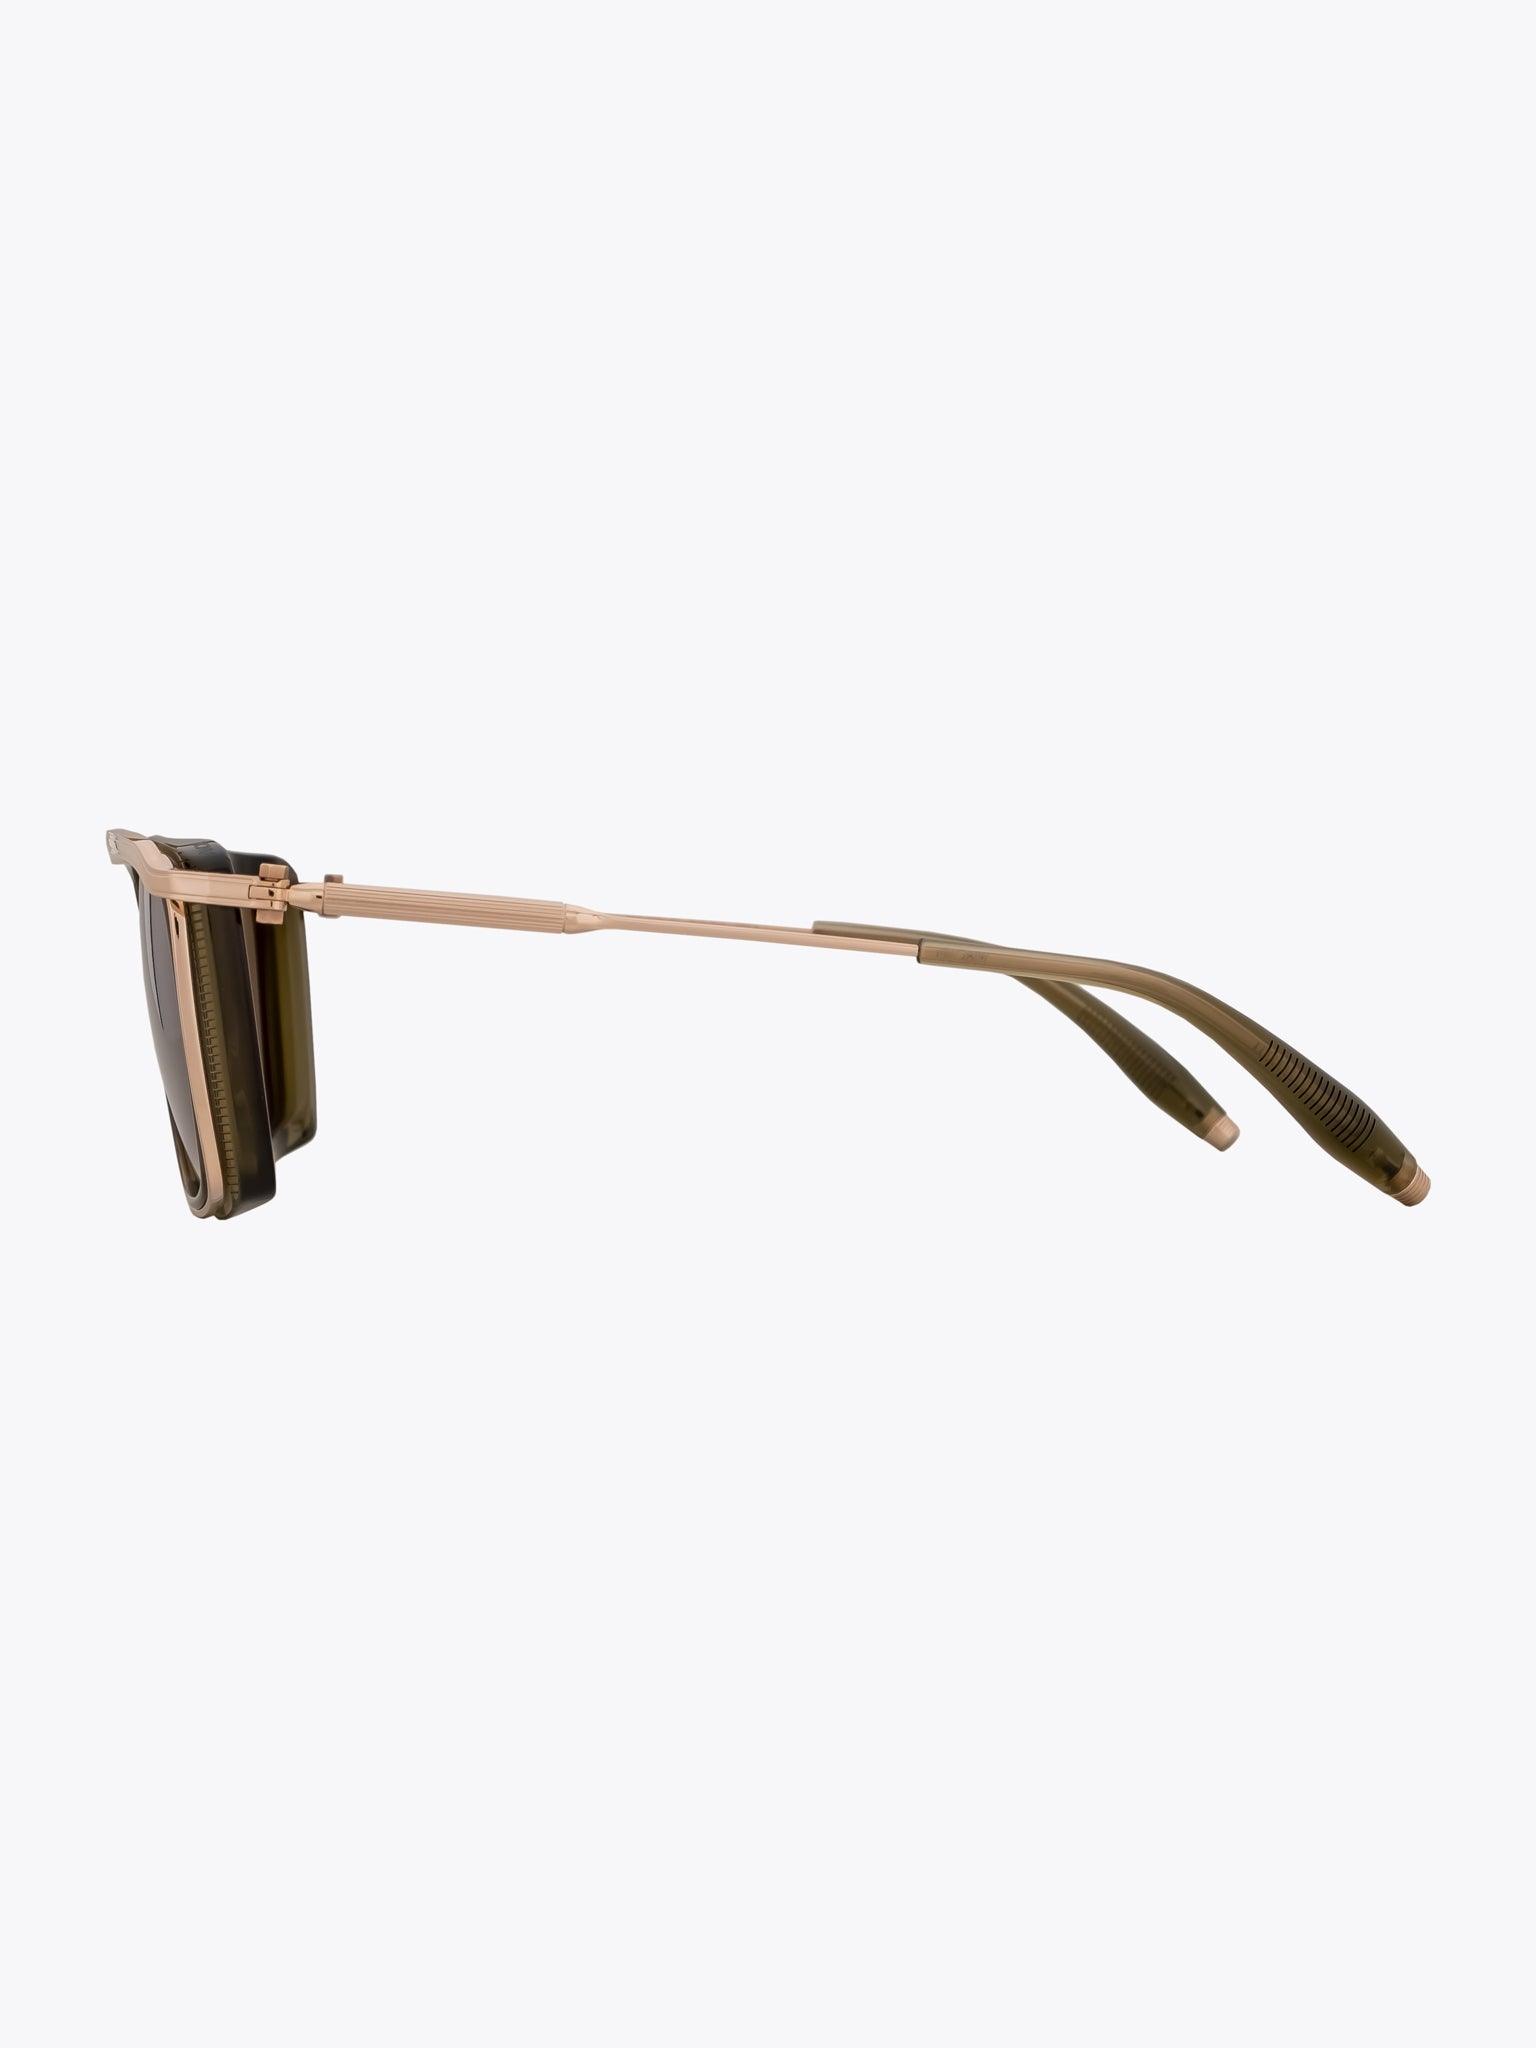 AKONI Ulysses Gold/Olive Sunglasses